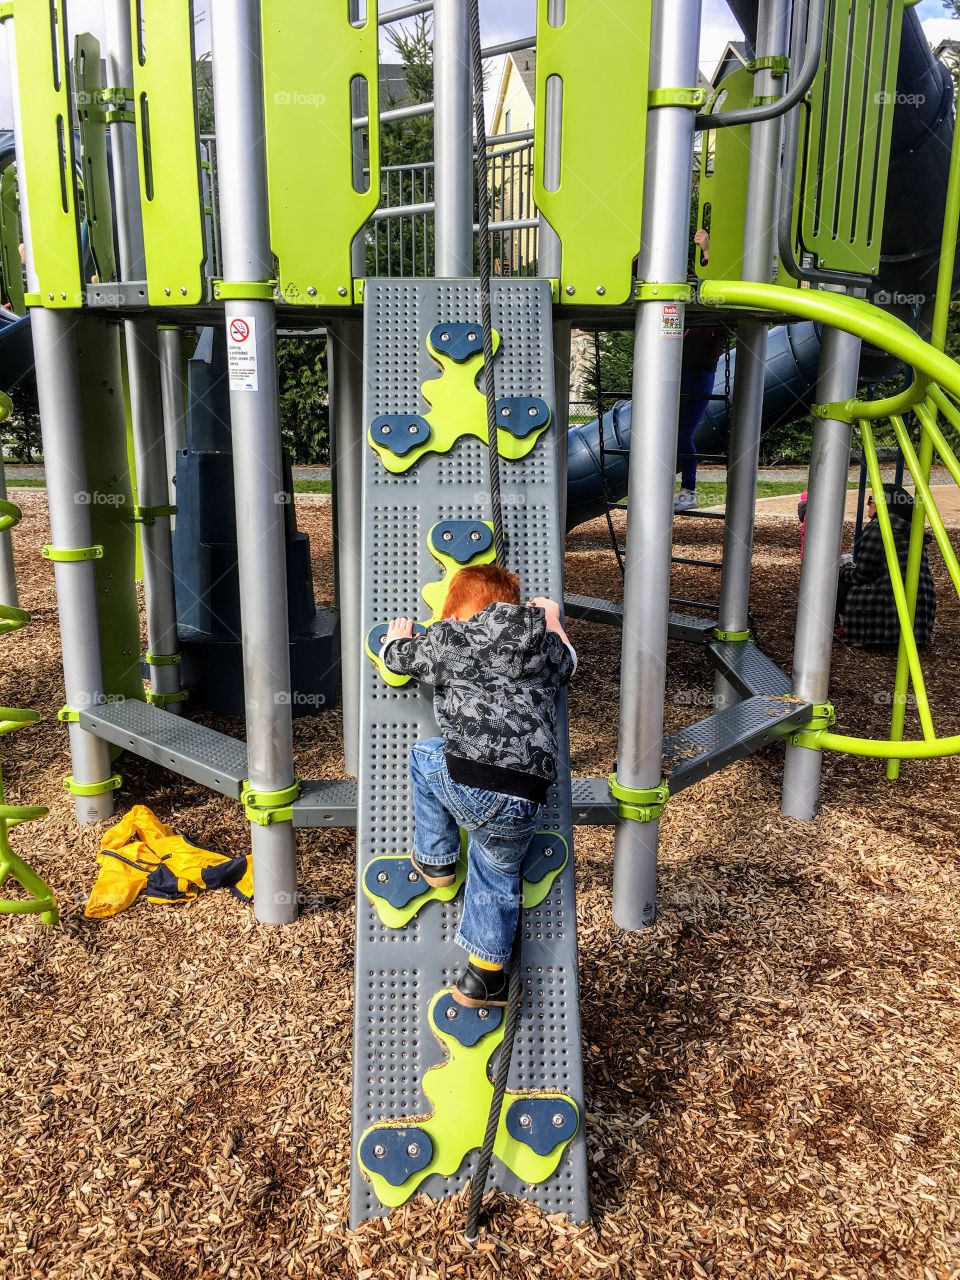 Toddler climbing at the playground. 